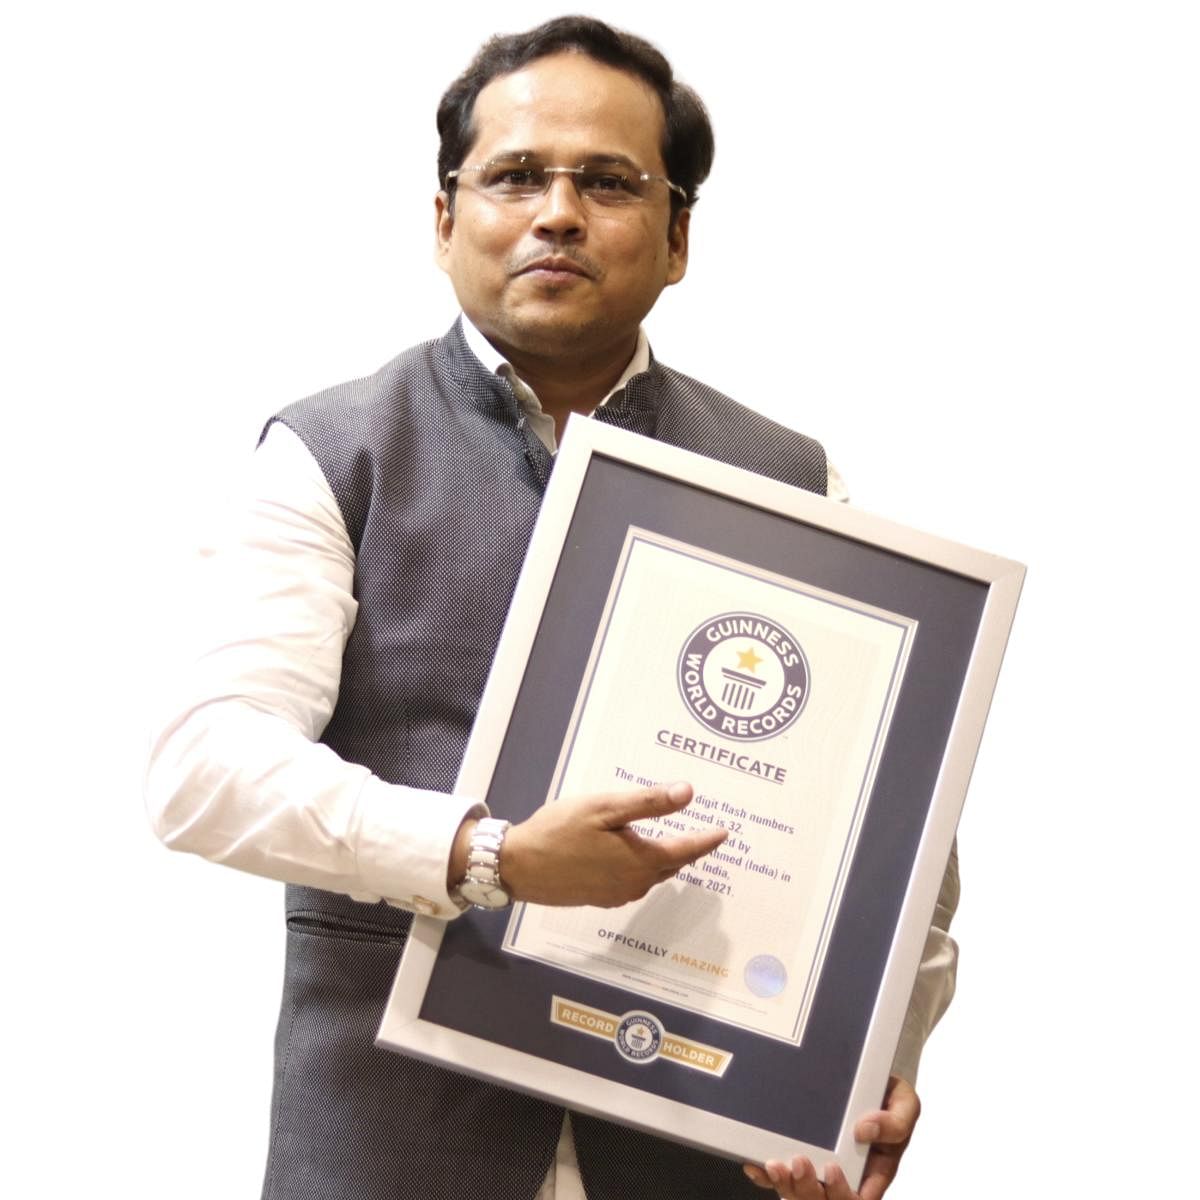 Bengalurean memory wiz sets Guinness record